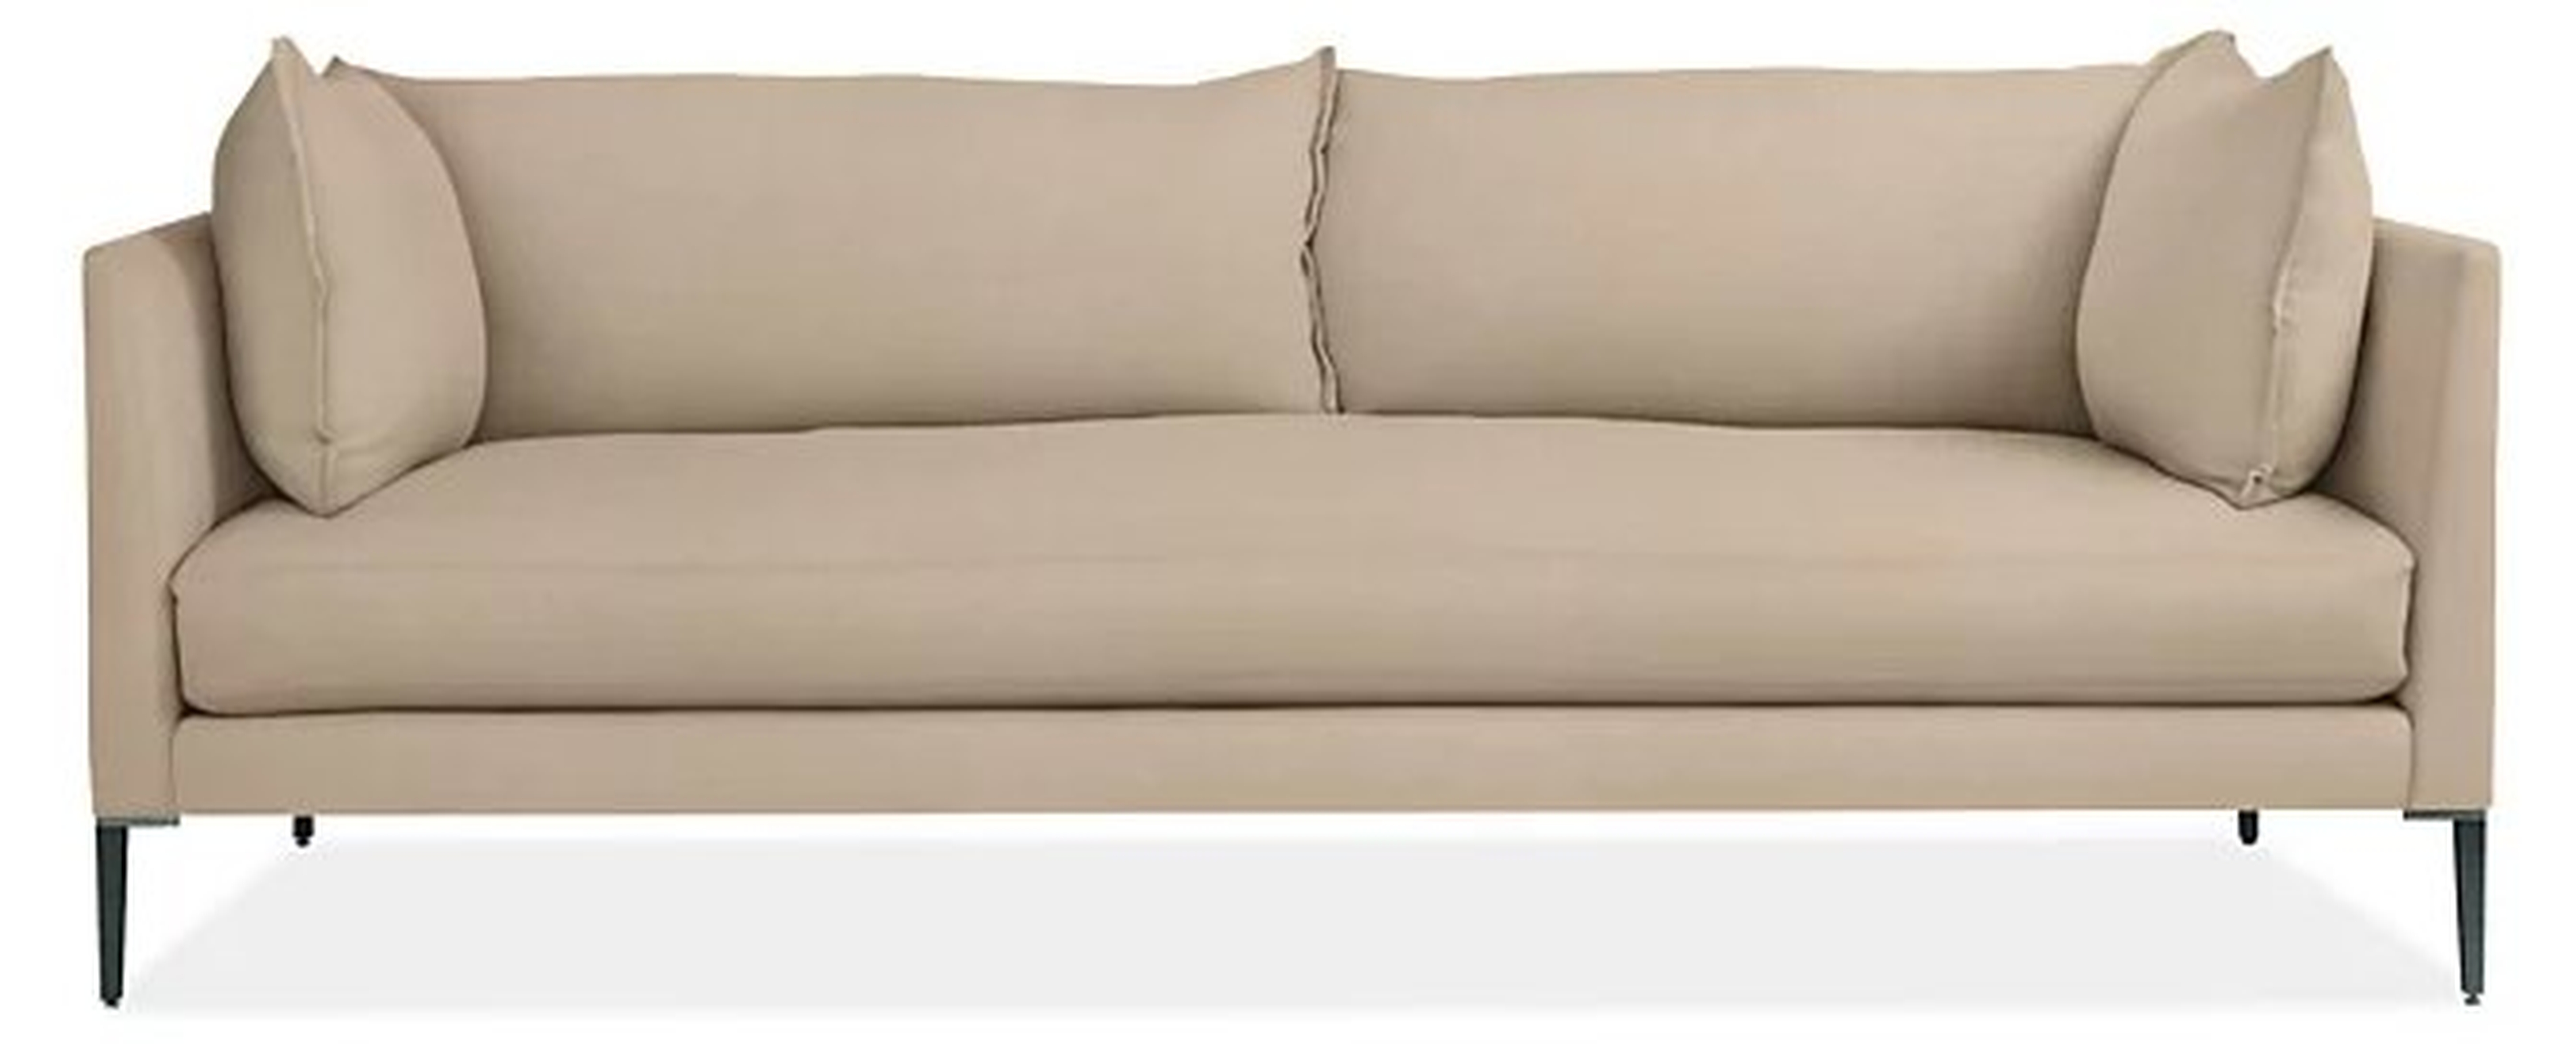 Vela 84" Bench Cushion Sofa in Banks Natural - Room & Board